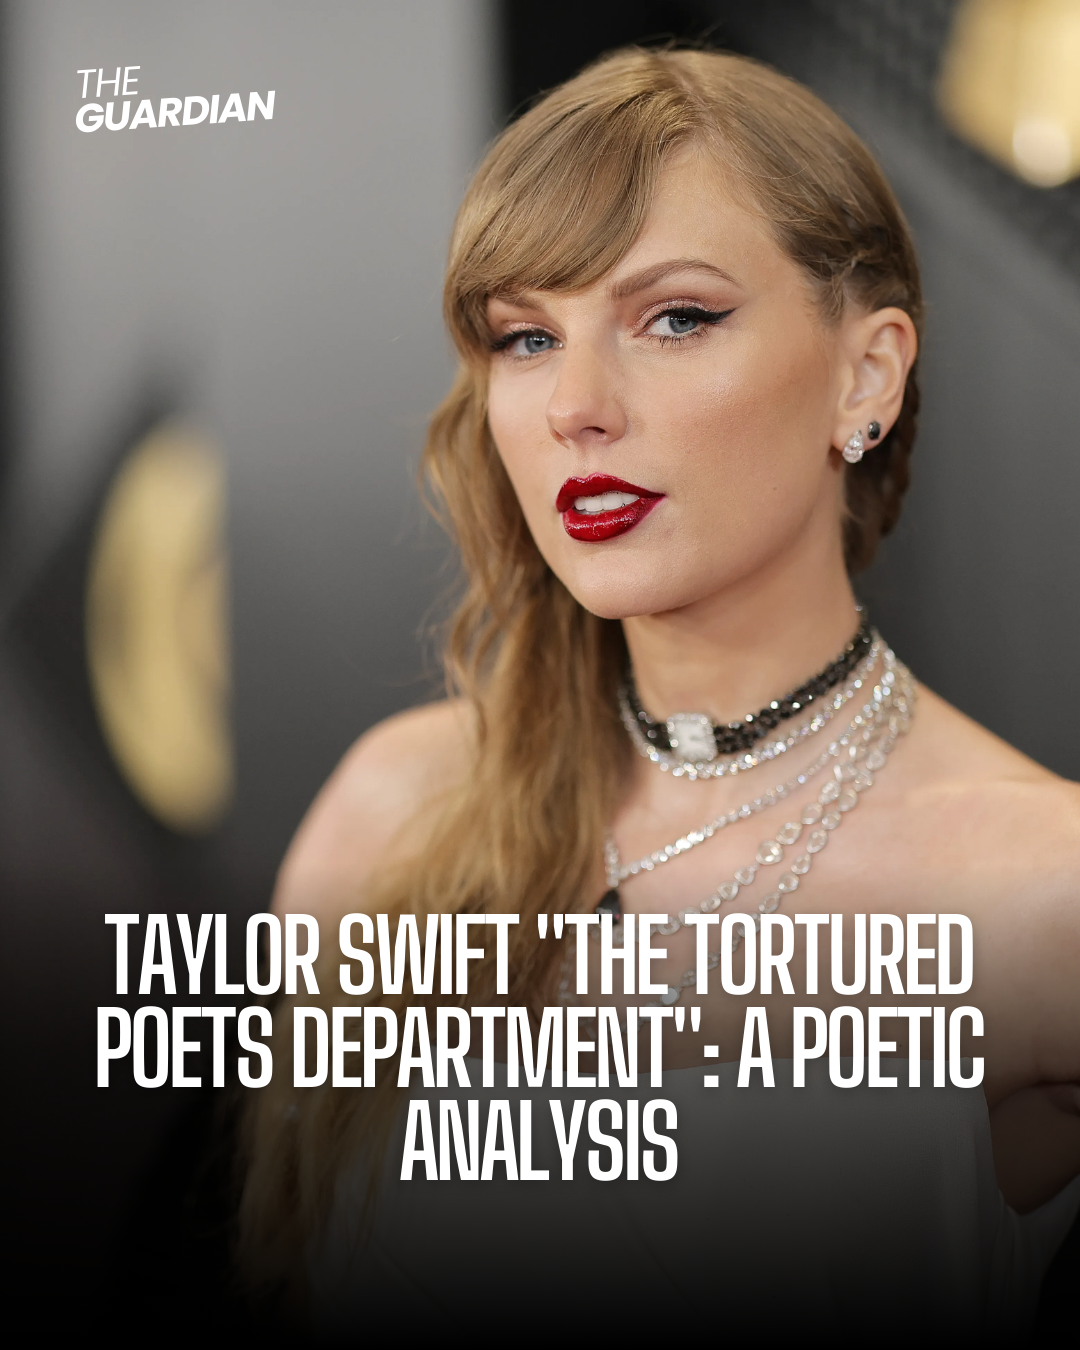 Taylor Swift's 11 studio album, "The Tortured Poets Department," has stirred debate over its lyrical merits.